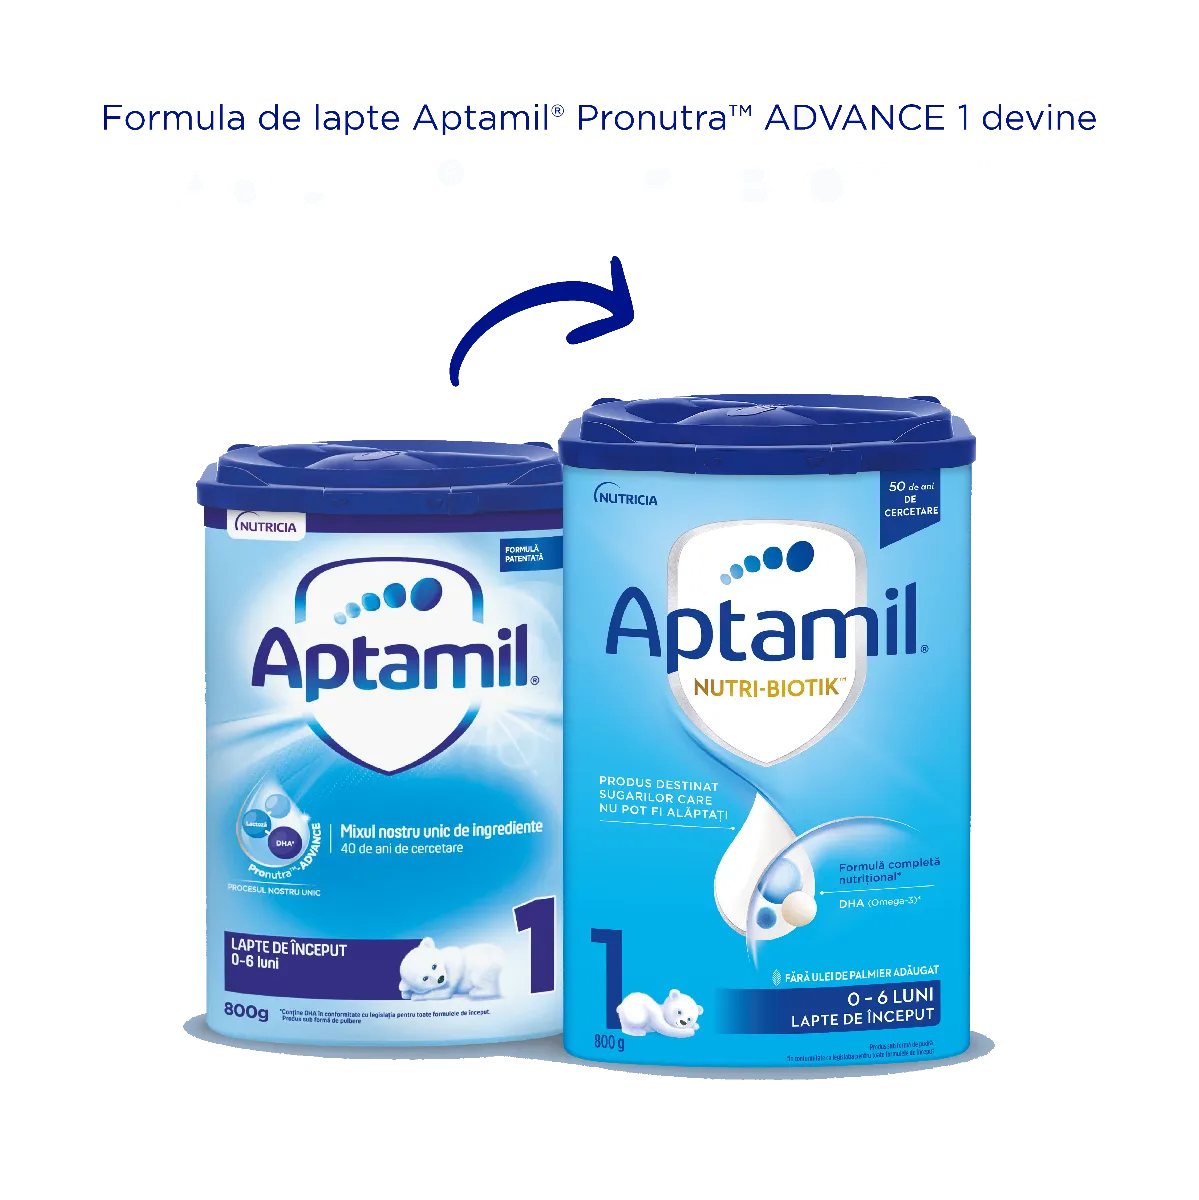 Lapte de inceput 0-6 luni NUTRI-BIOTIK 1, 800g, Aptamil